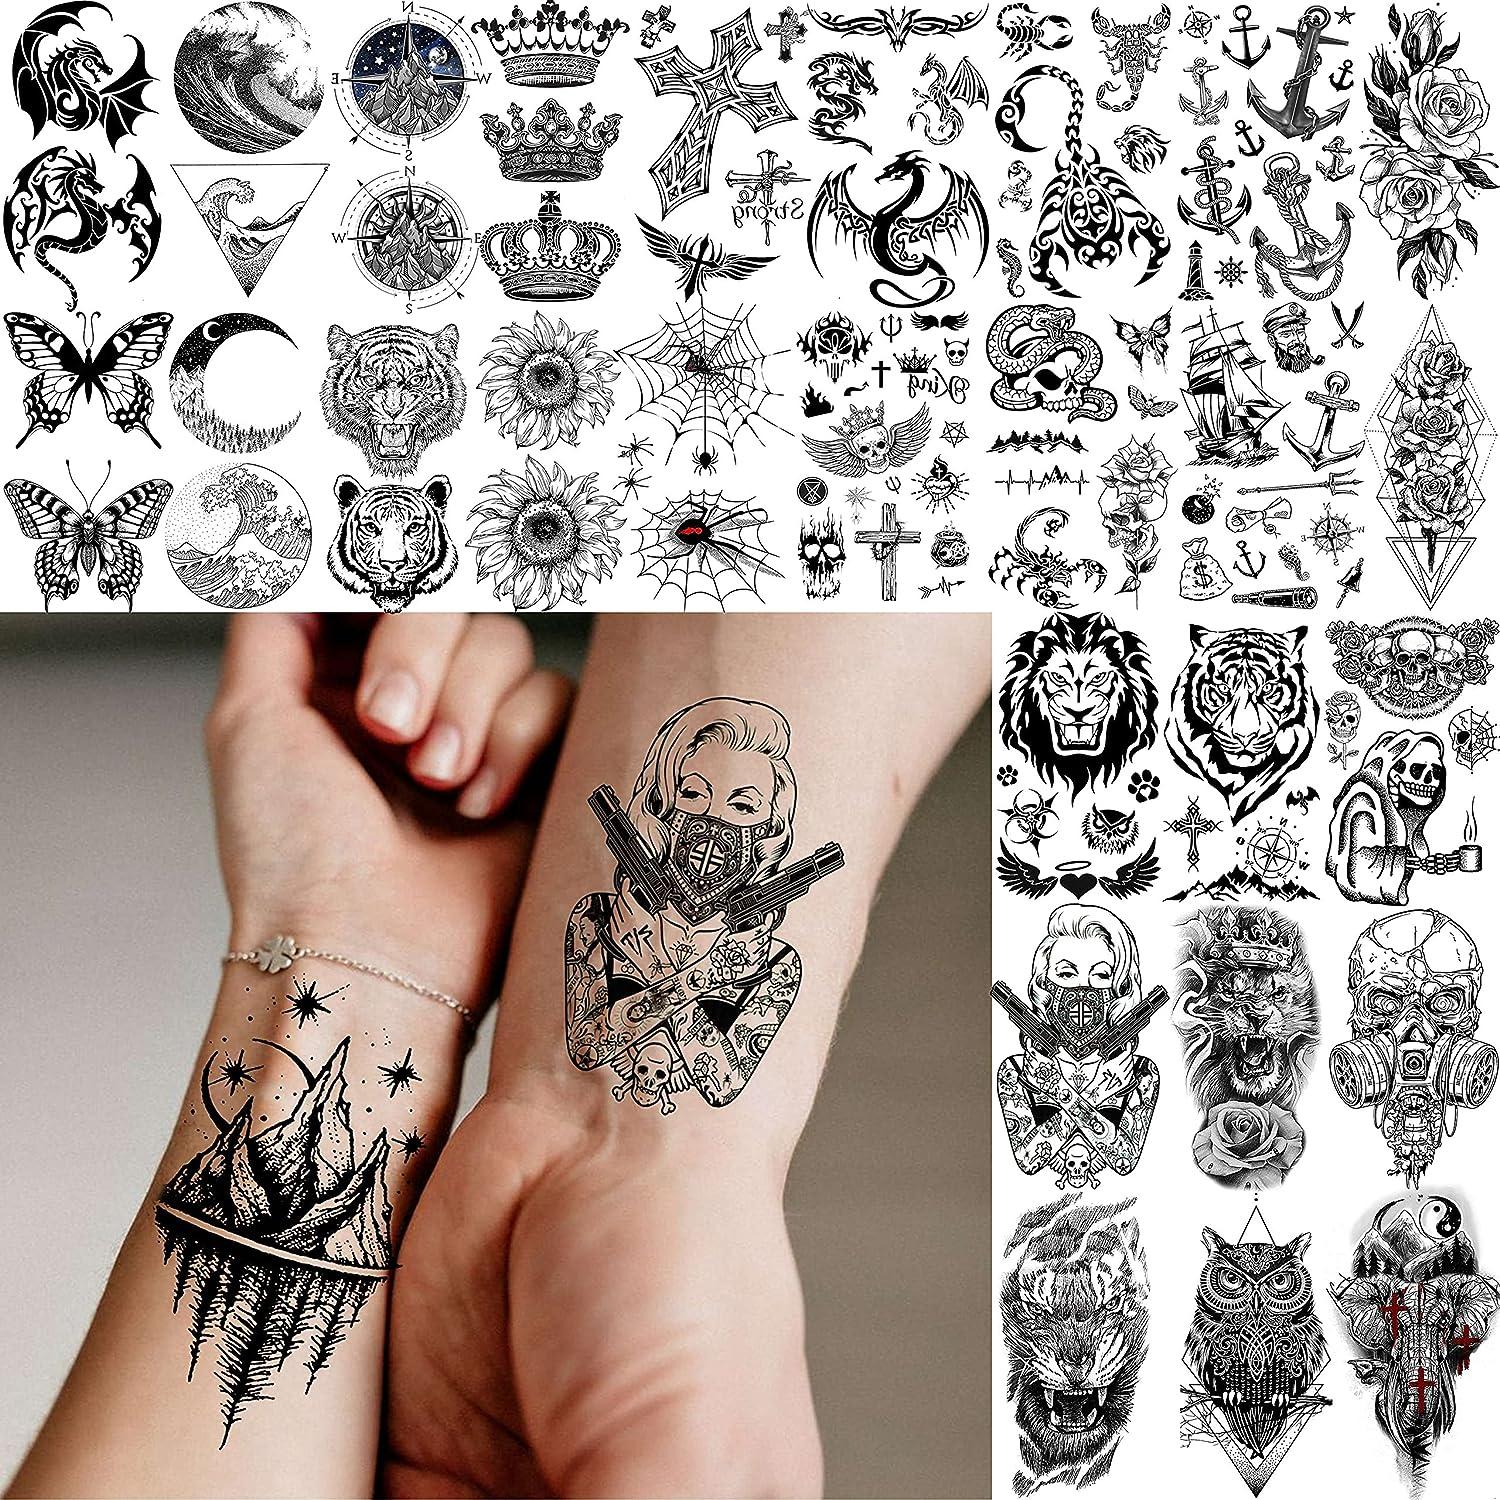 Traditional Eagle Tattoo by thetigerzeye on DeviantArt